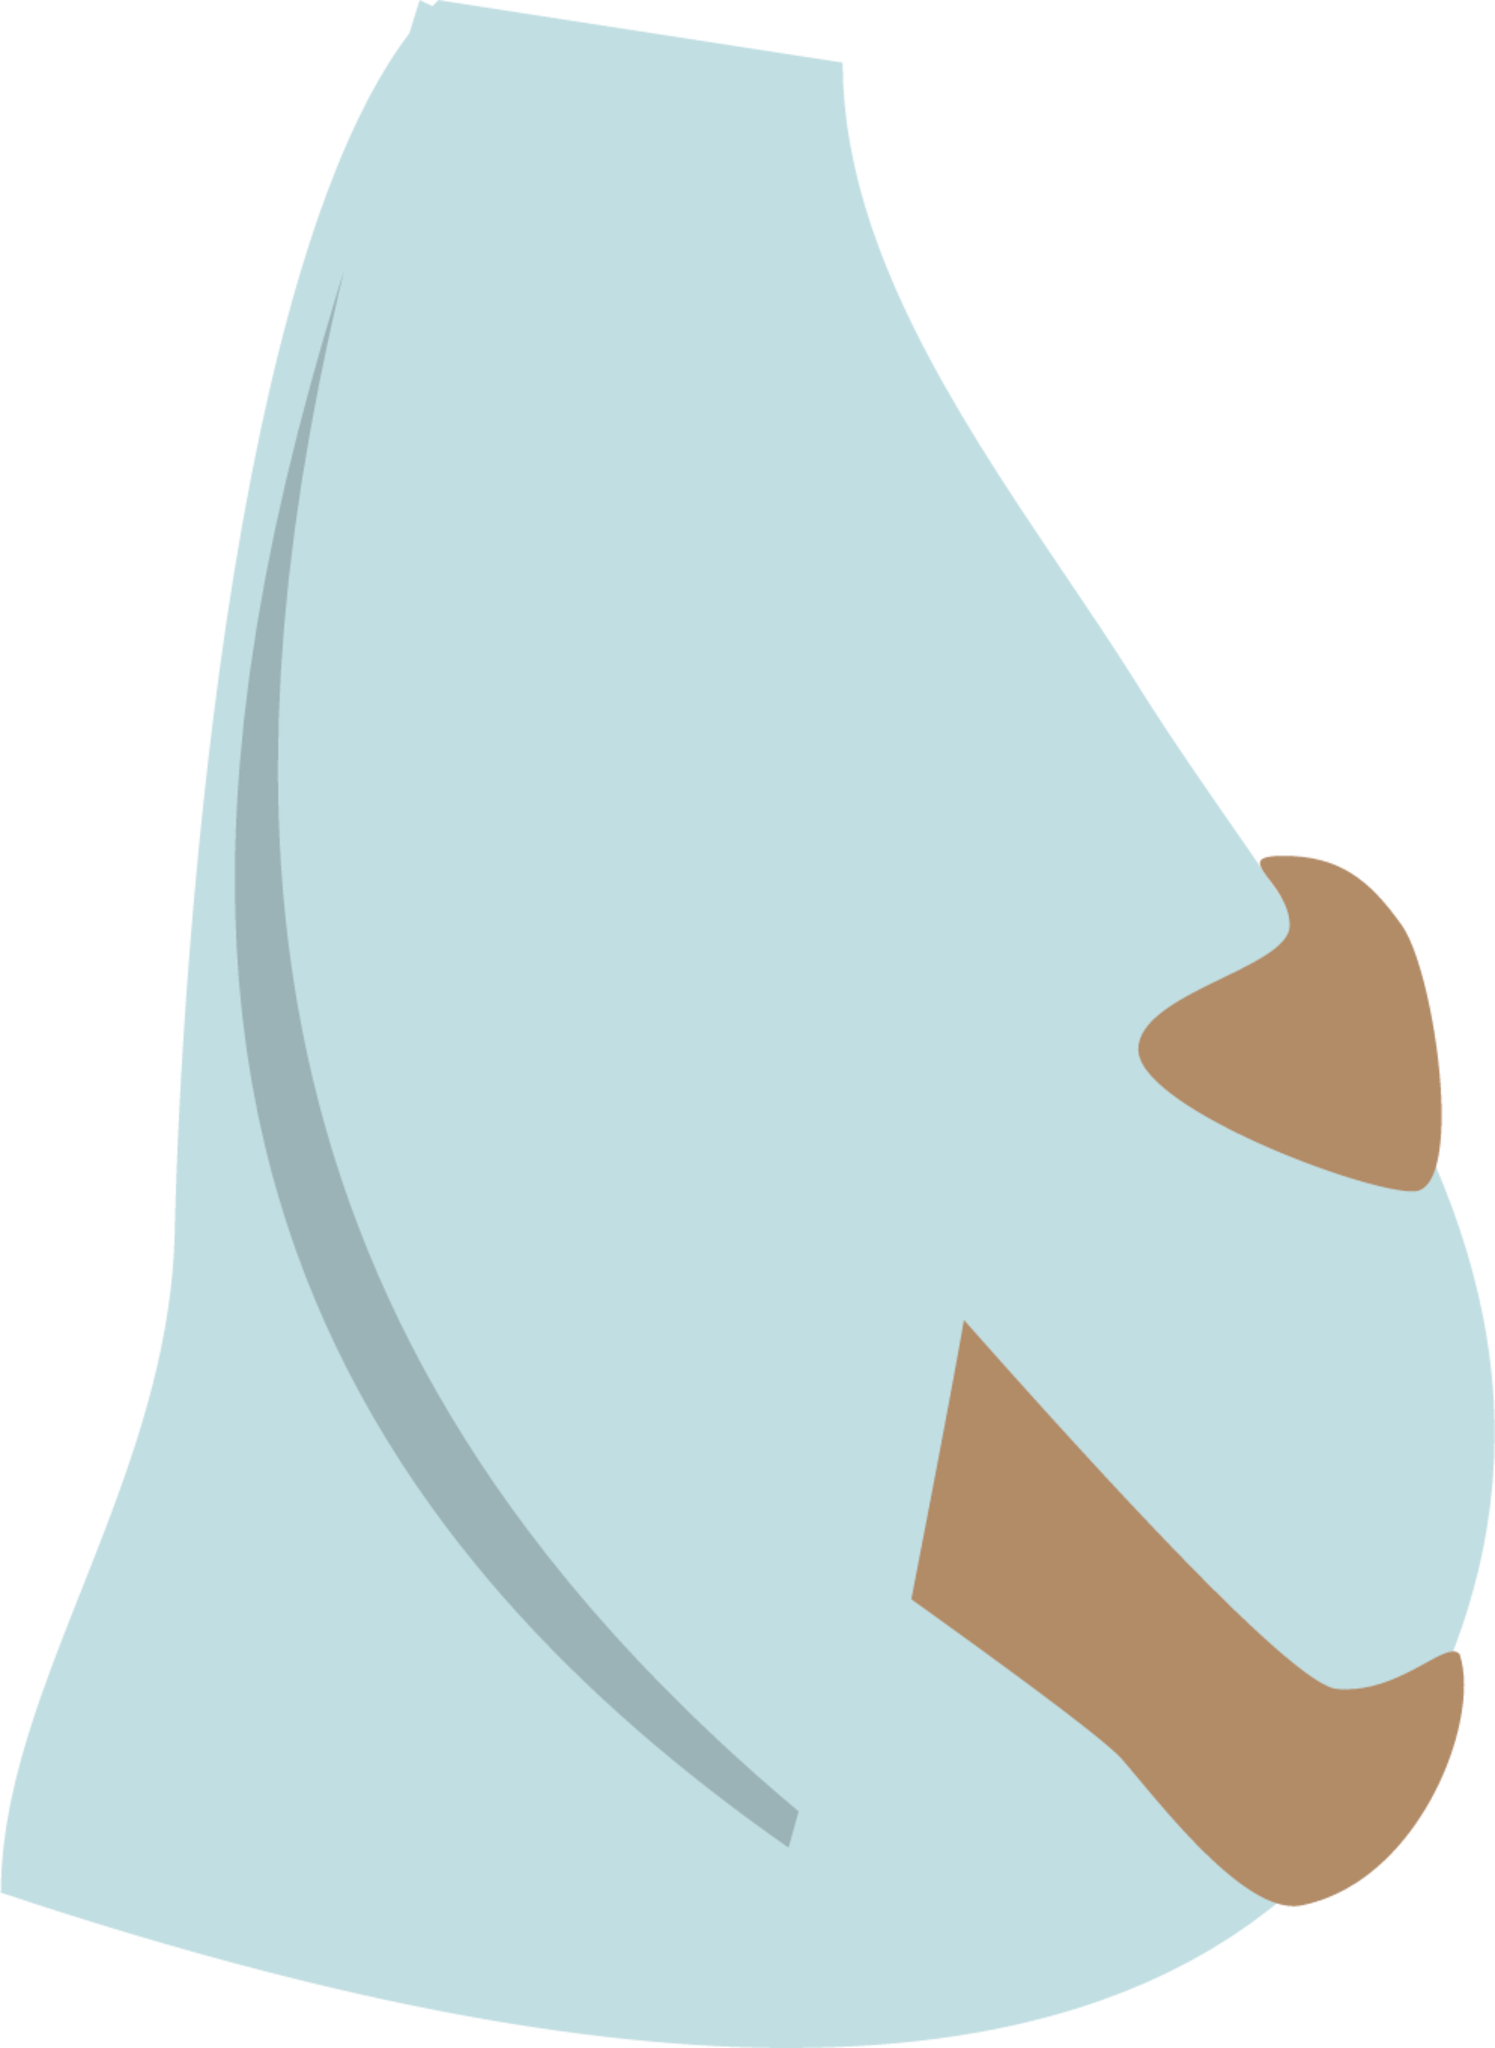 Pregnant woman baby birth illustration